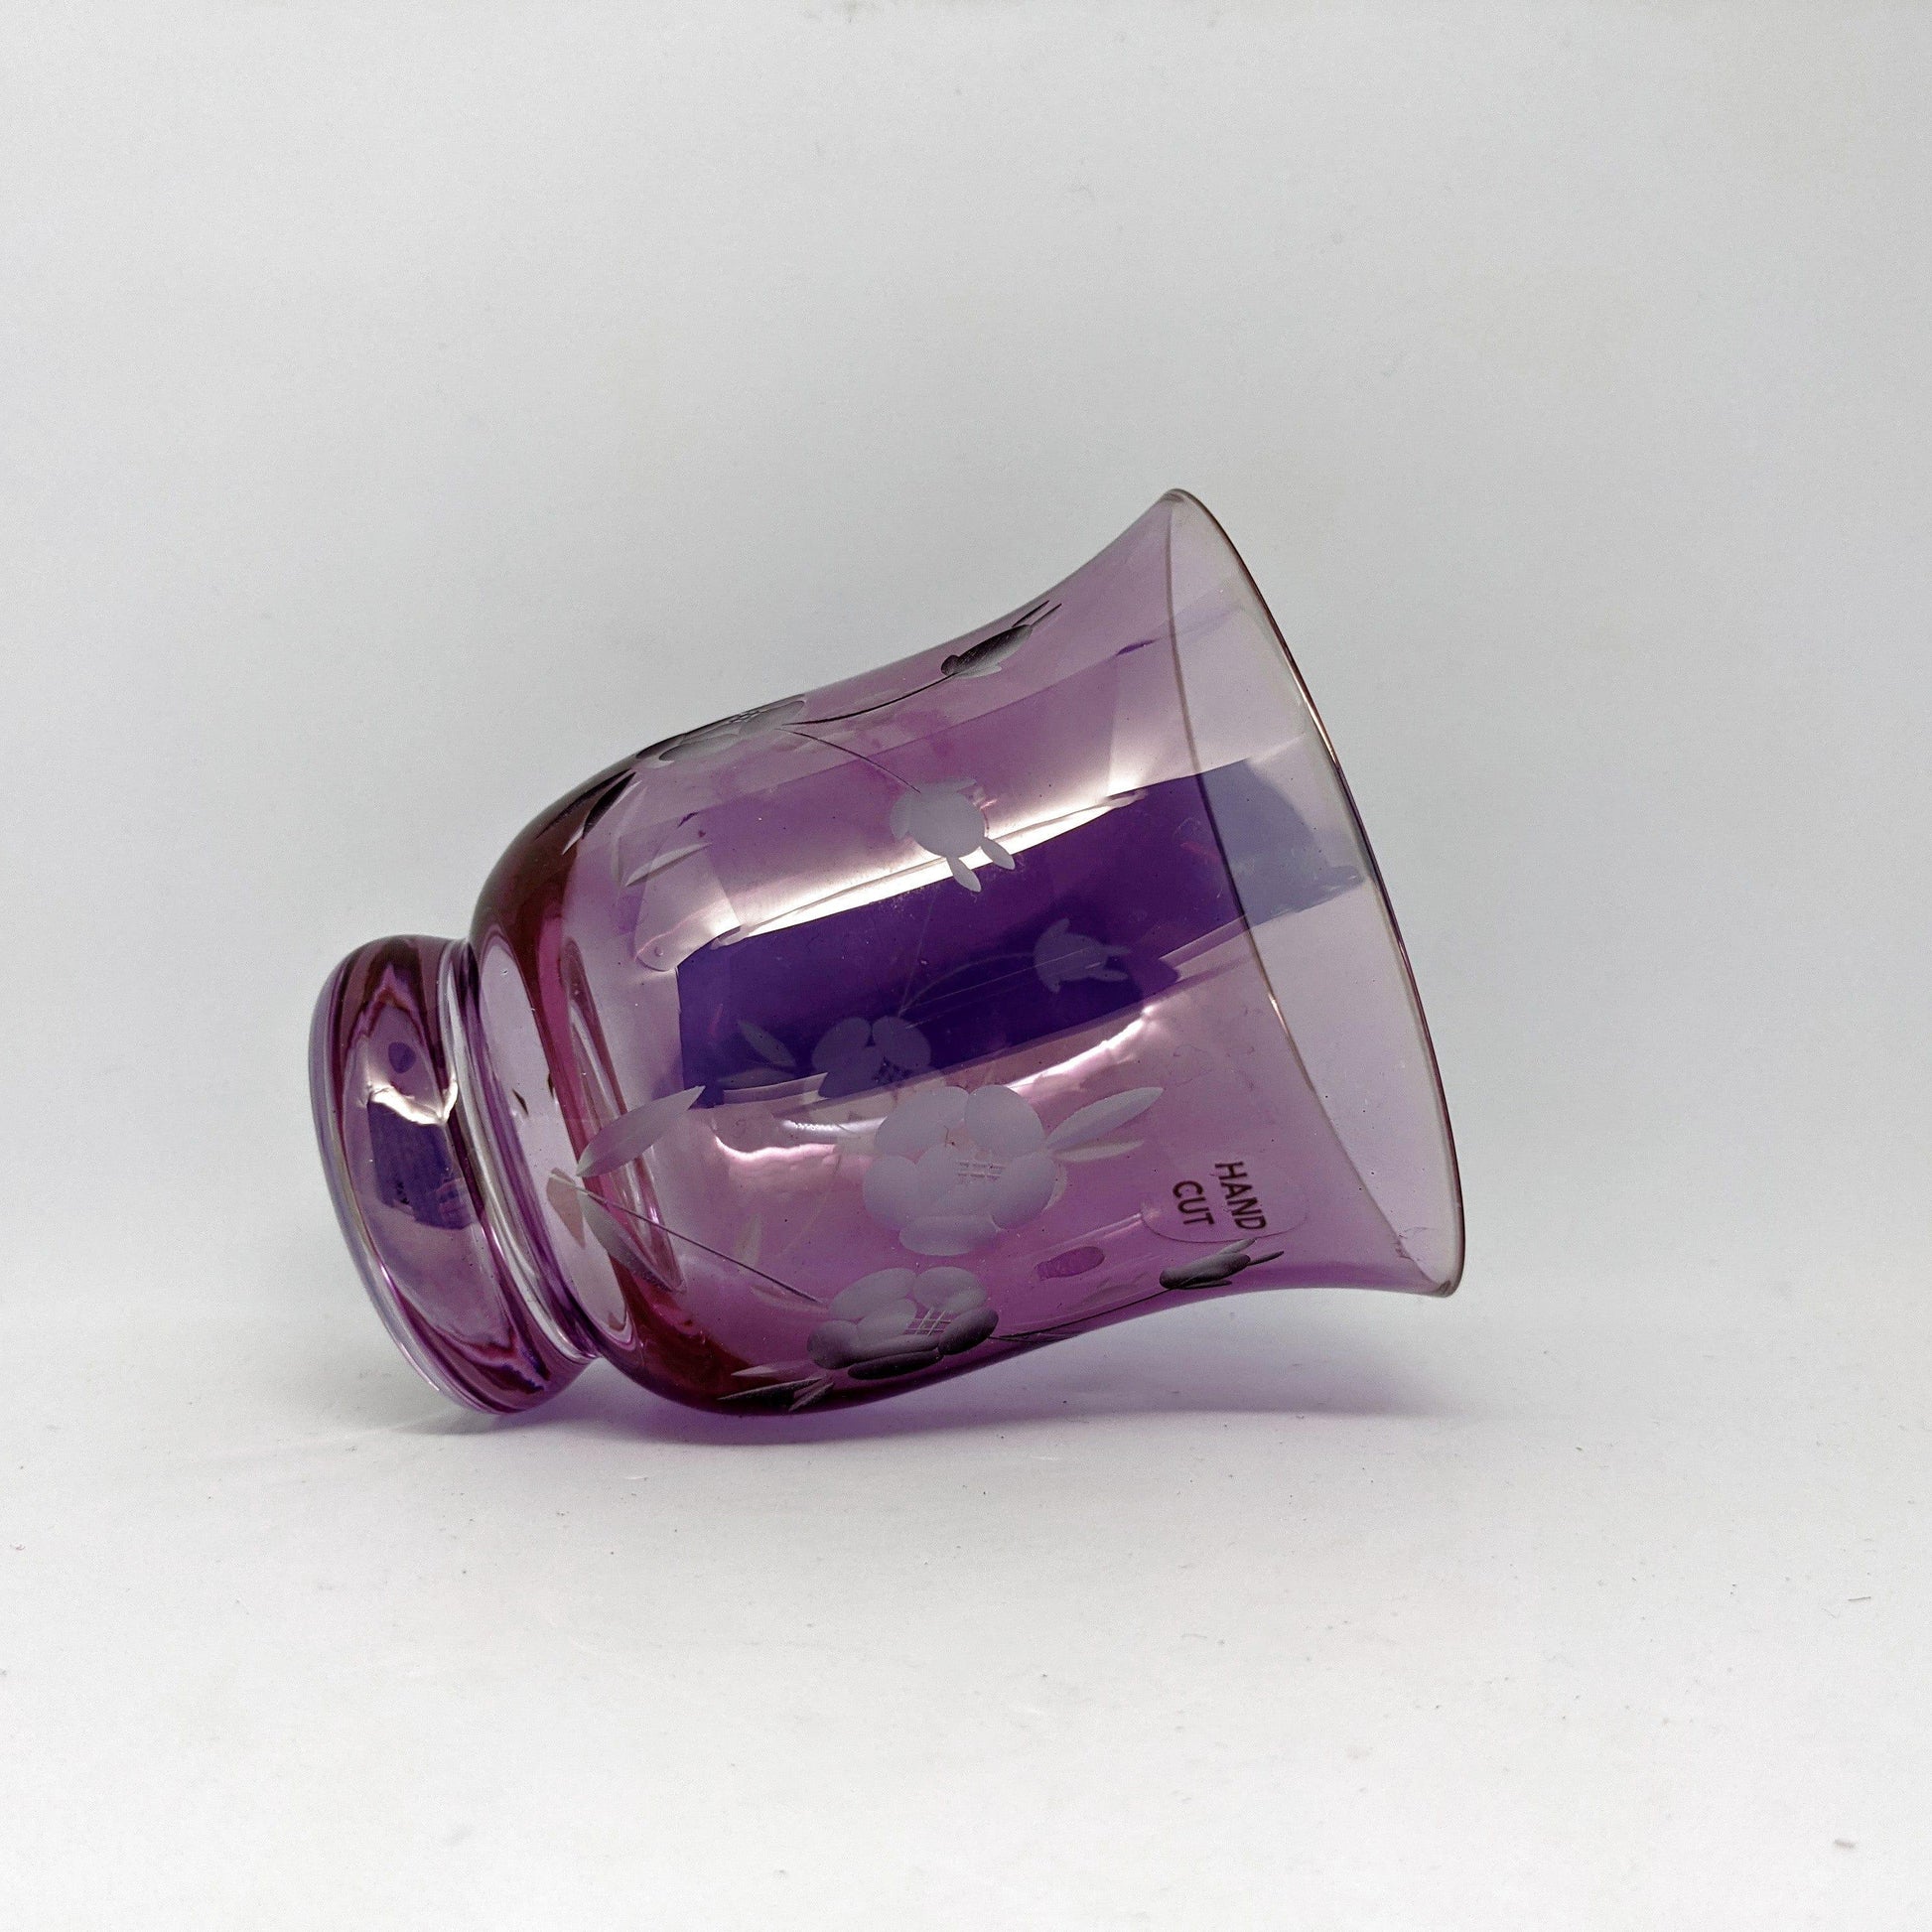 Royal Albert Hand Cut-Crystal Vase.